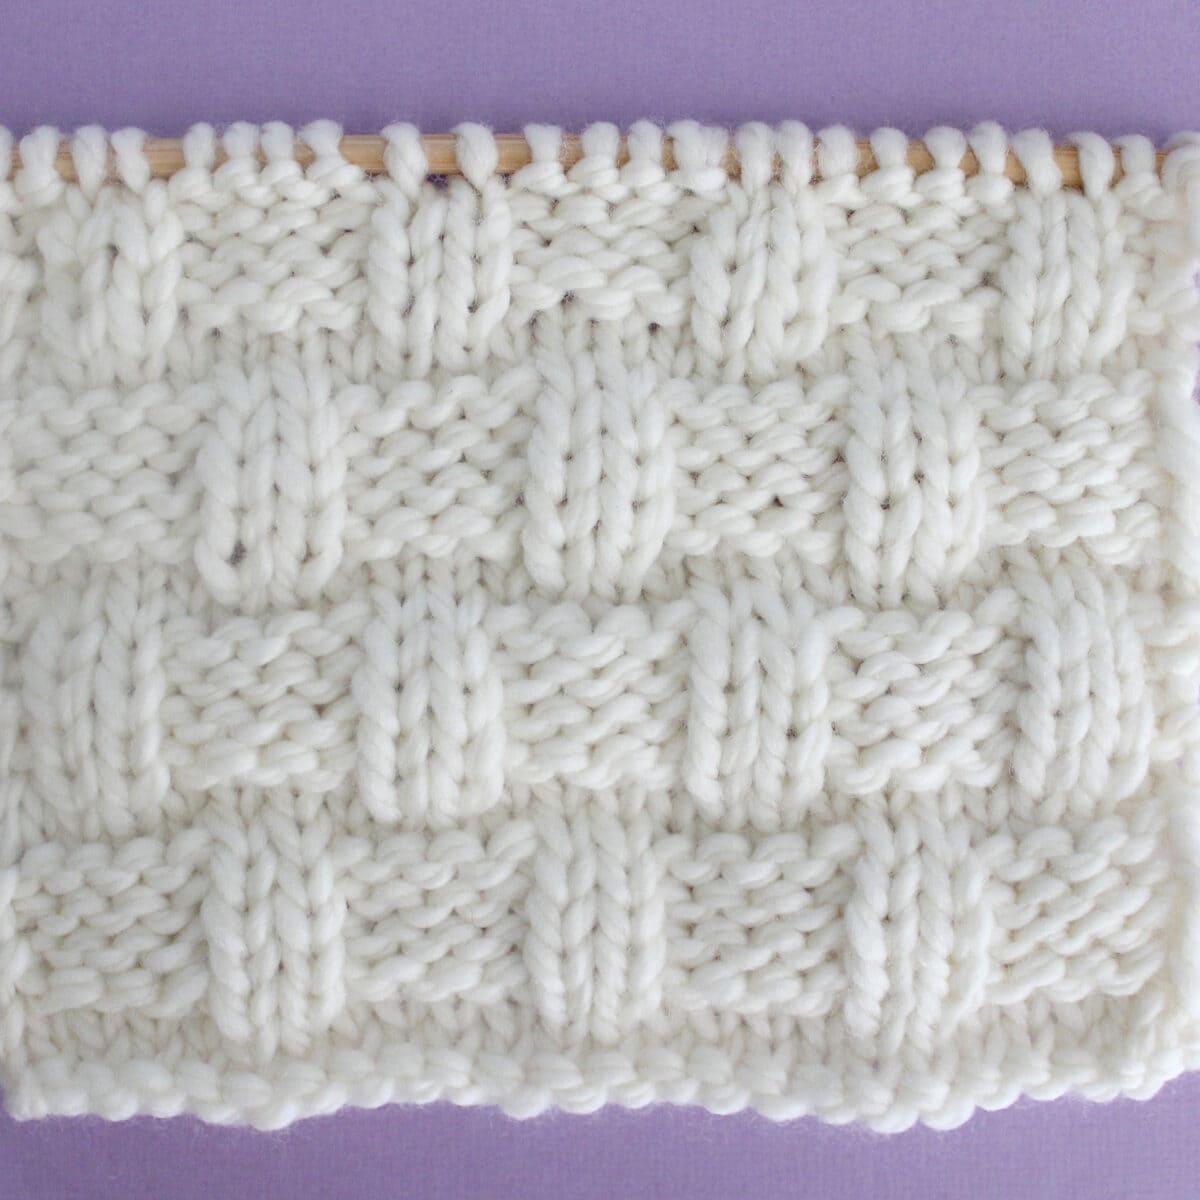 Basket Weave Stitch Knitting Pattern in white yarn color on knitting needle.